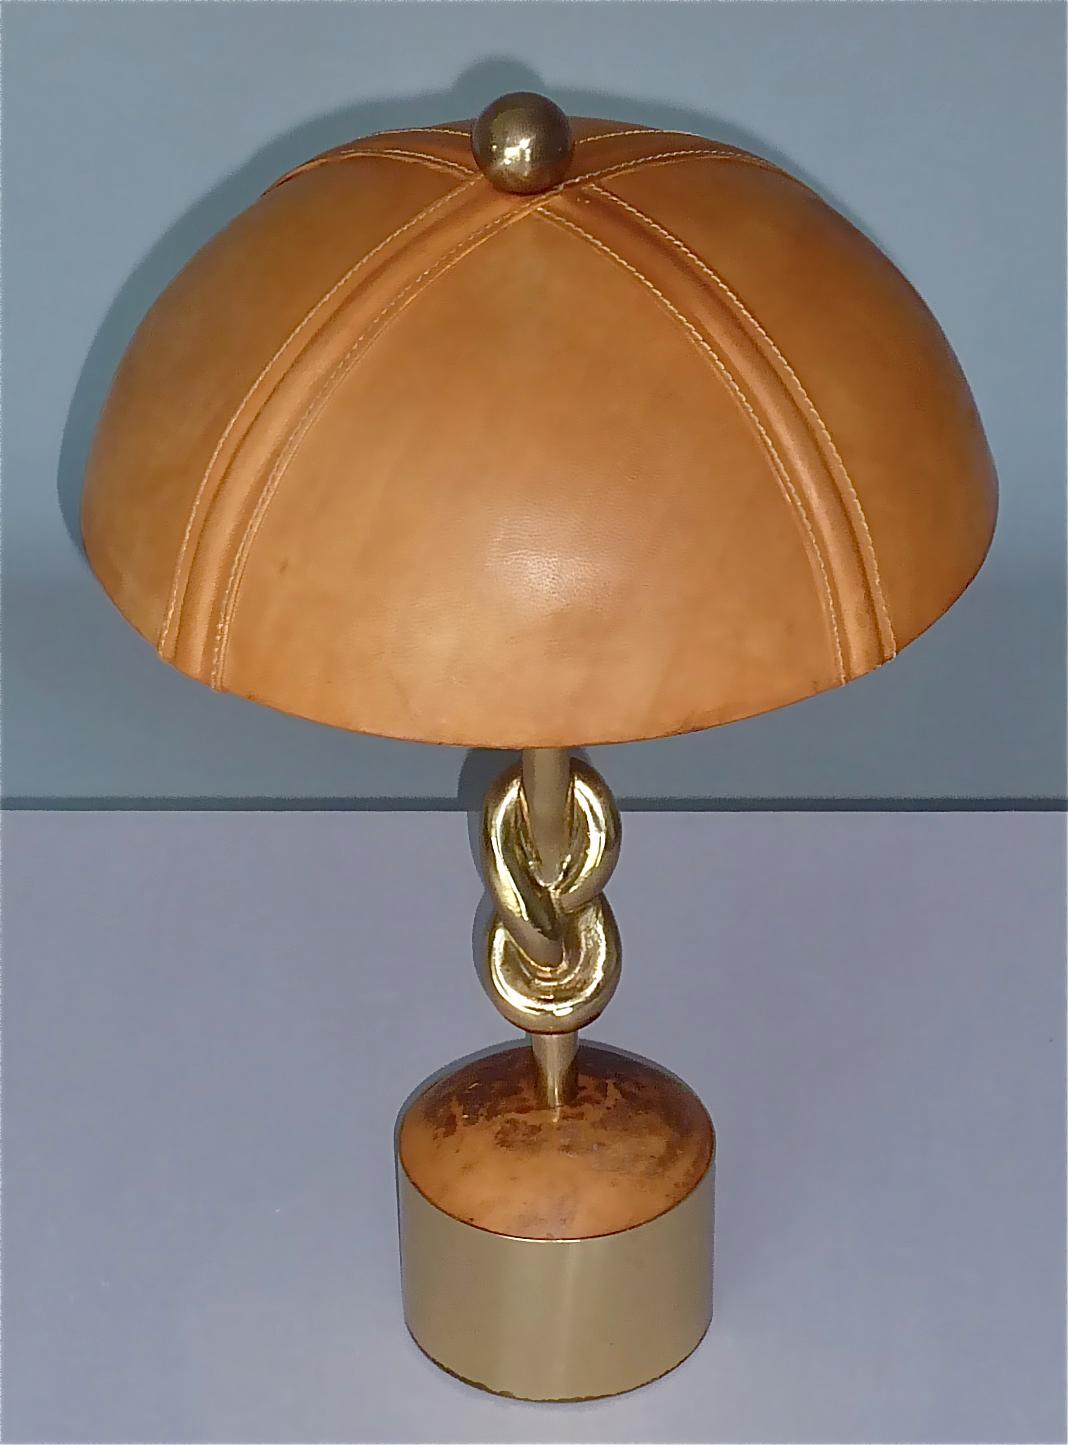 Sculptural Gilt Bronze Leather Knotted Table Lamp French 1970s Jansen Pergay Era In Good Condition For Sale In Nierstein am Rhein, DE